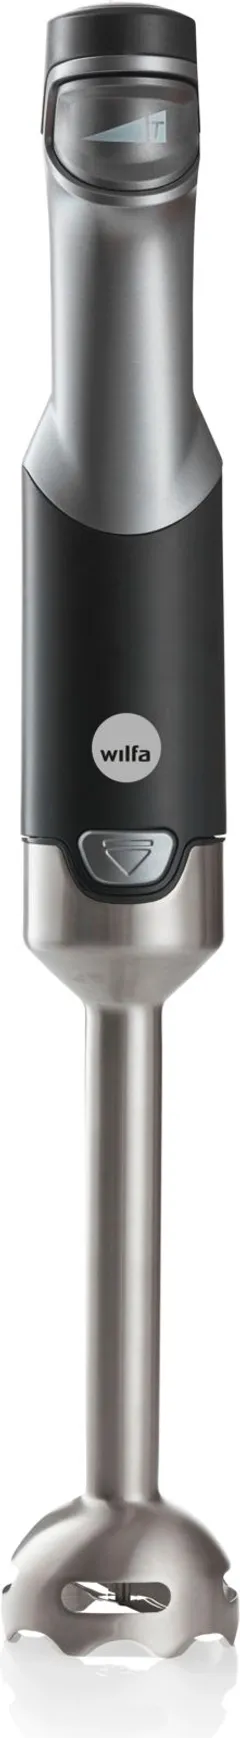 Wilfa sauvasekoitin Essential Power SM-1000FP - 5